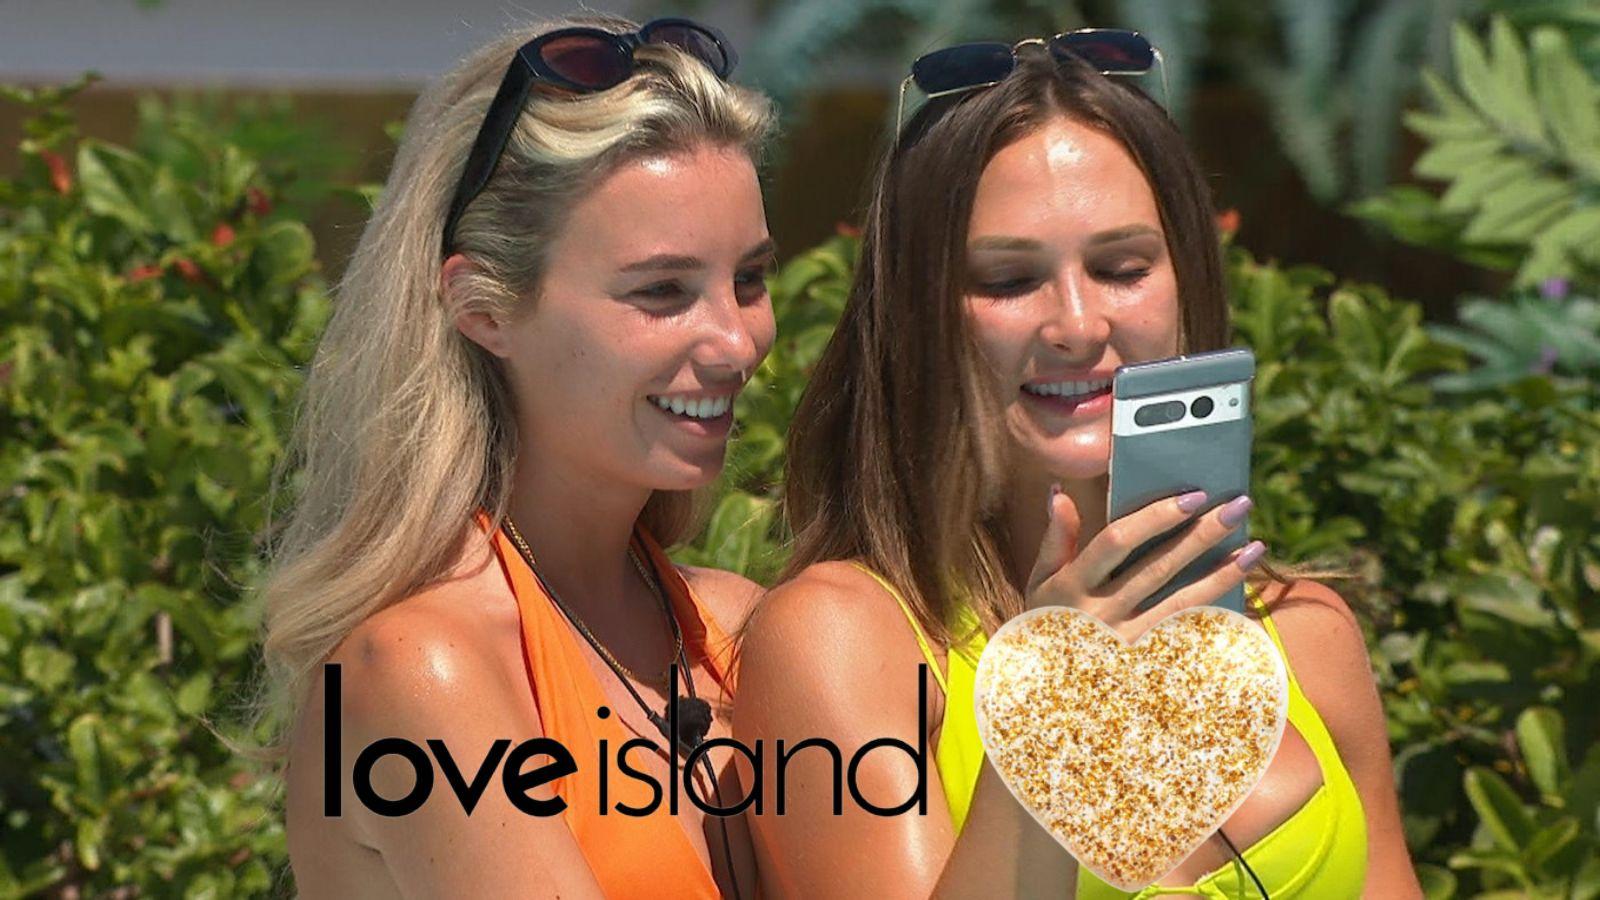 Love Island social media ban